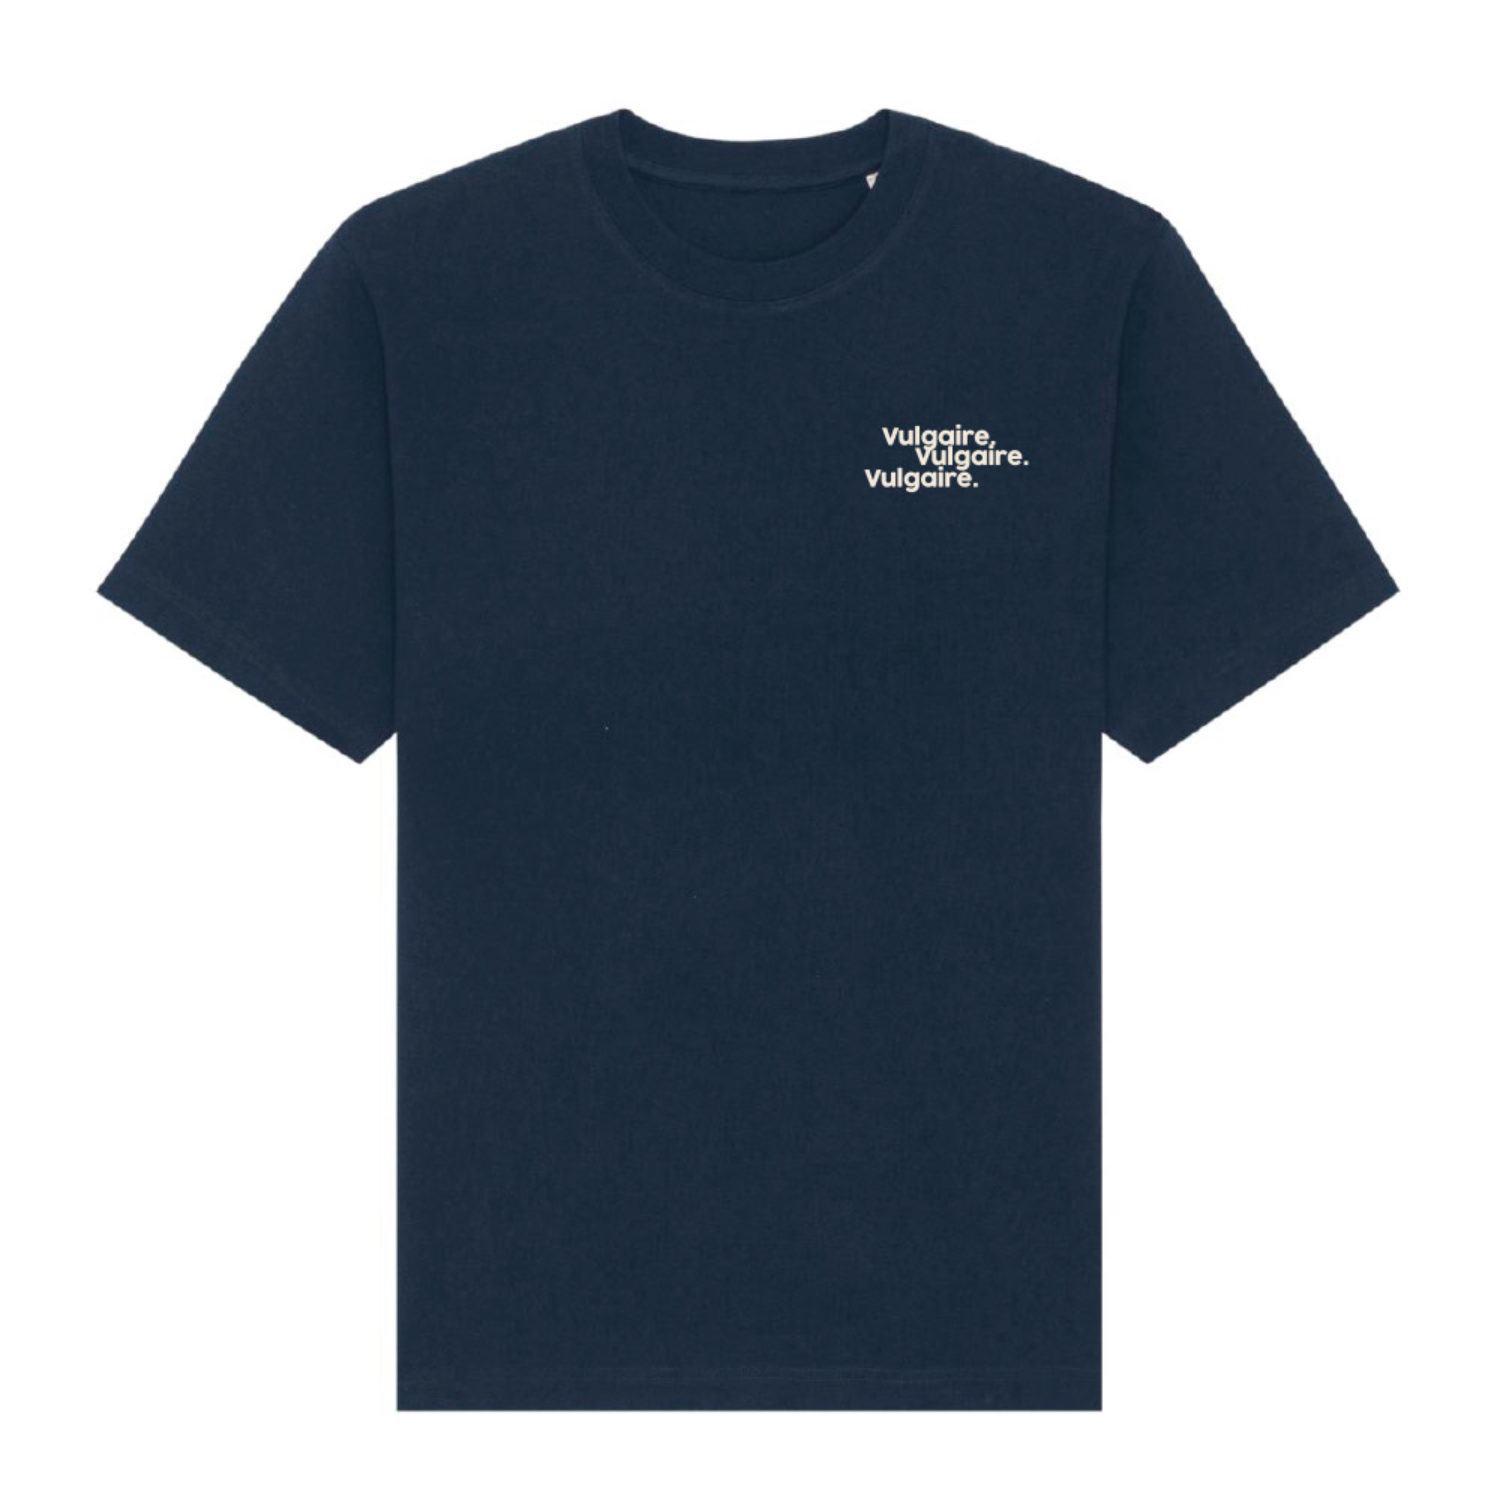 T-shirt Reverse - .eriagluV Navy